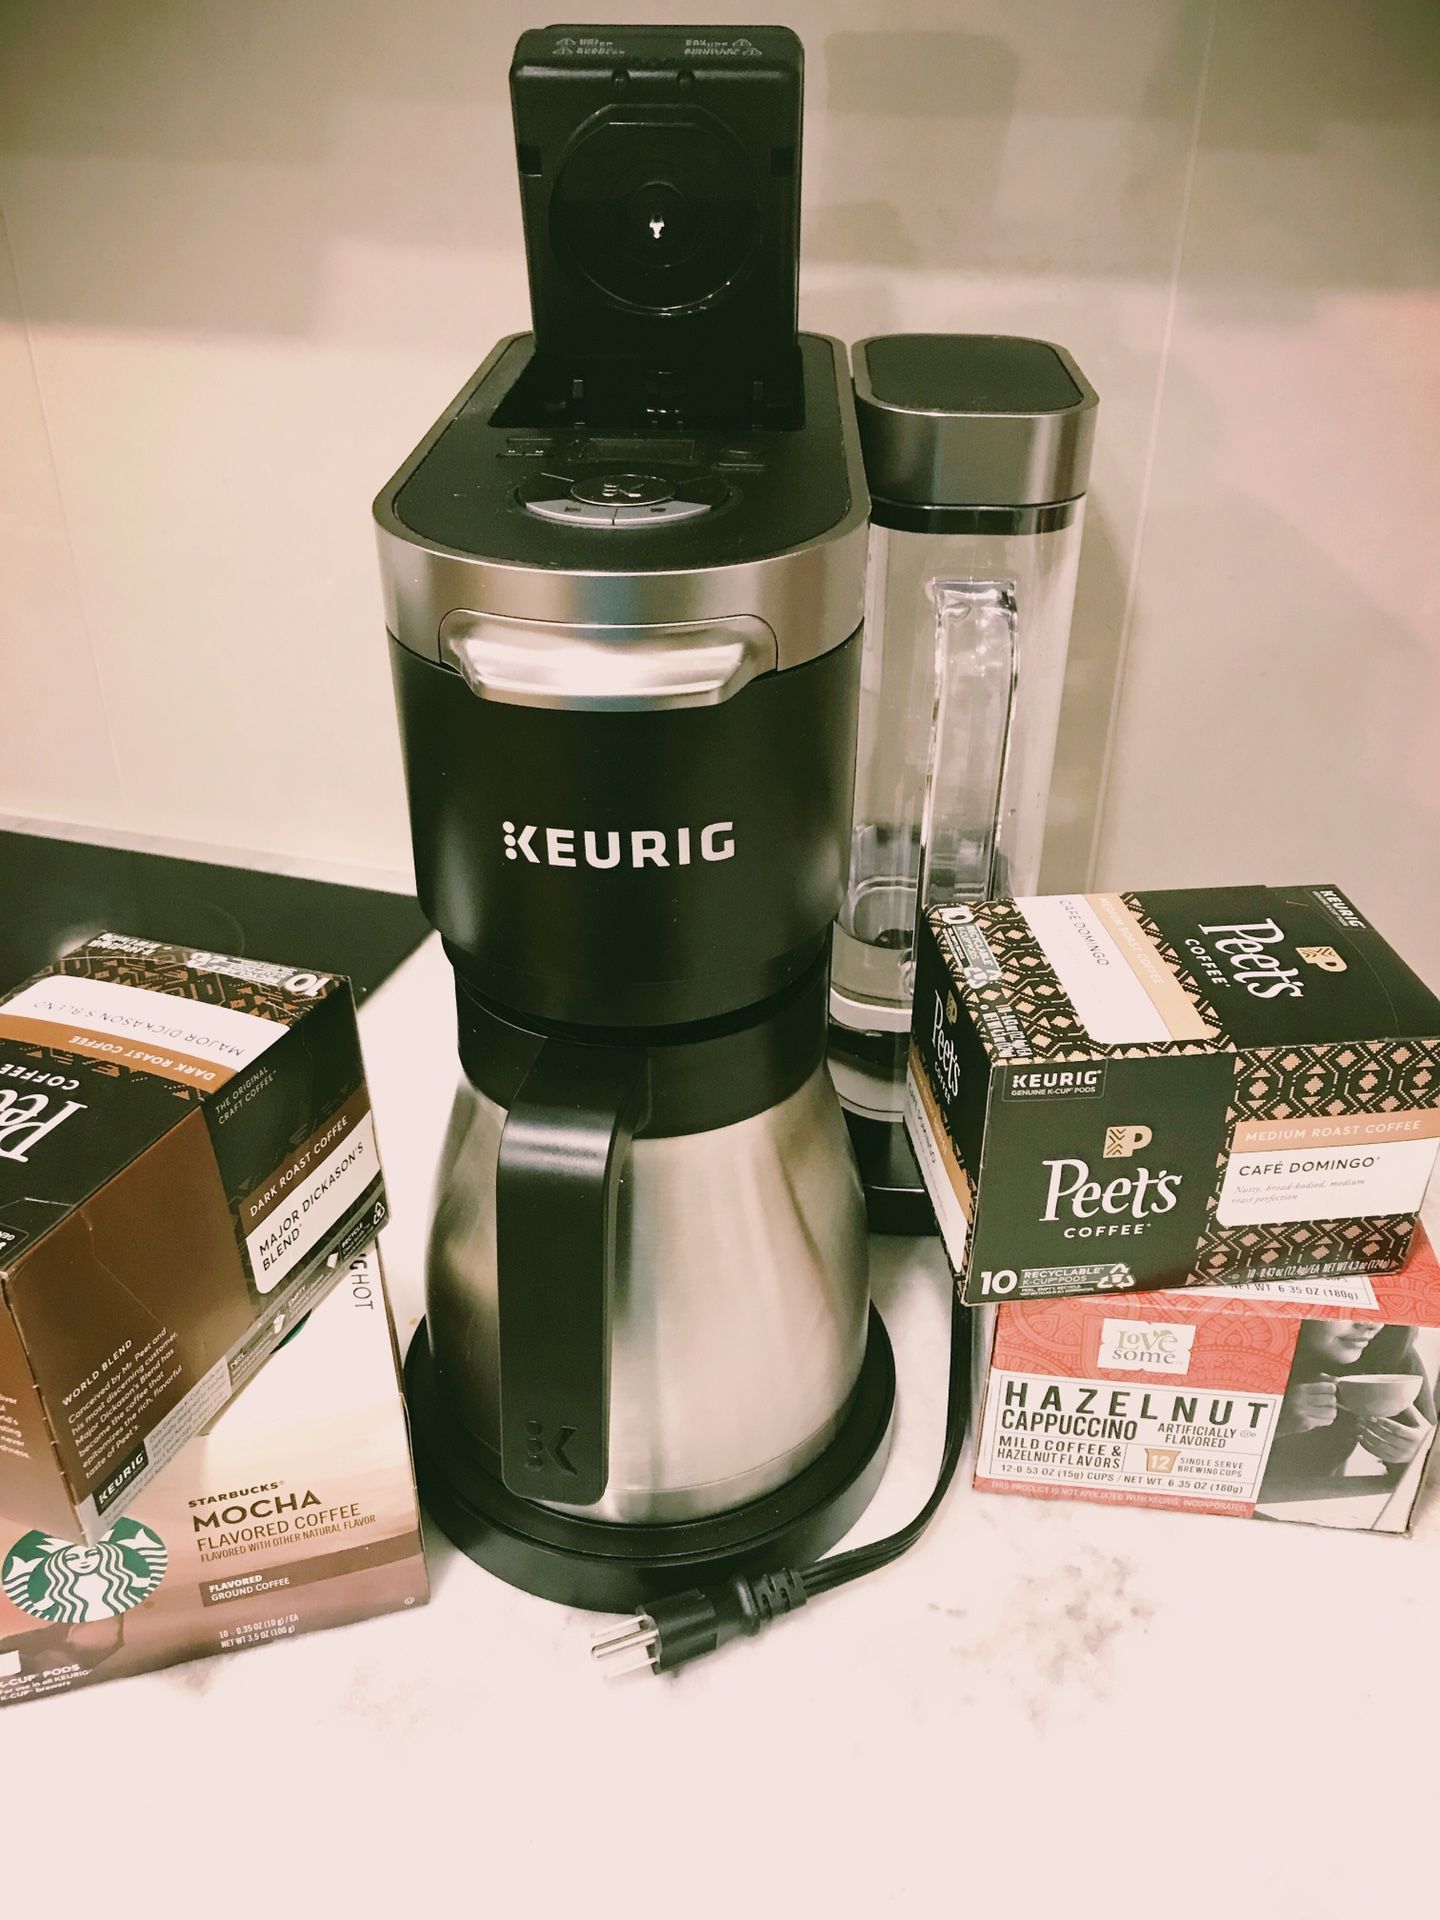 Keurig K Duo Plus Coffee Maker - Only 2 months old